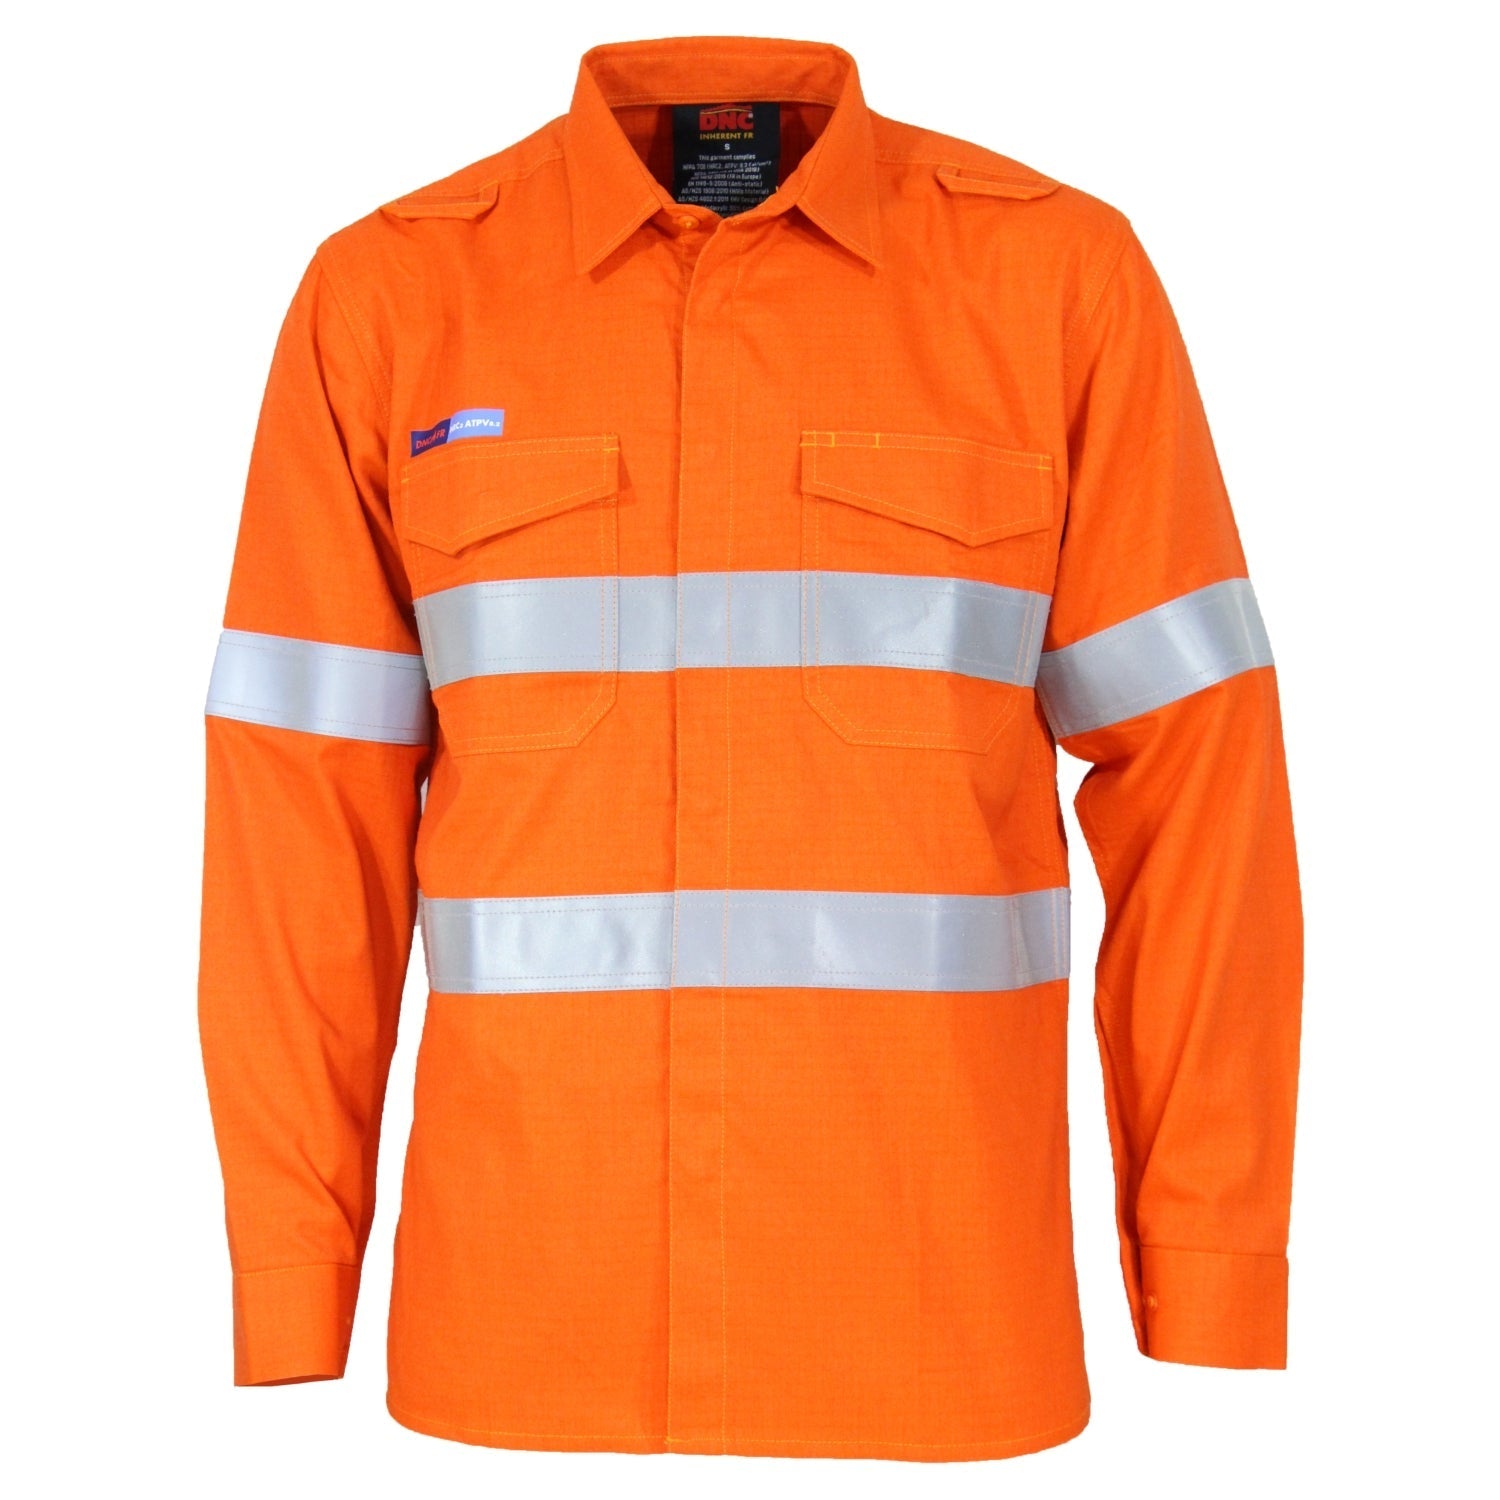 Flamearc Hrc2 M/w D/n Fr Shirt - 3456 Work Wear DNC Workwear Orange XS 